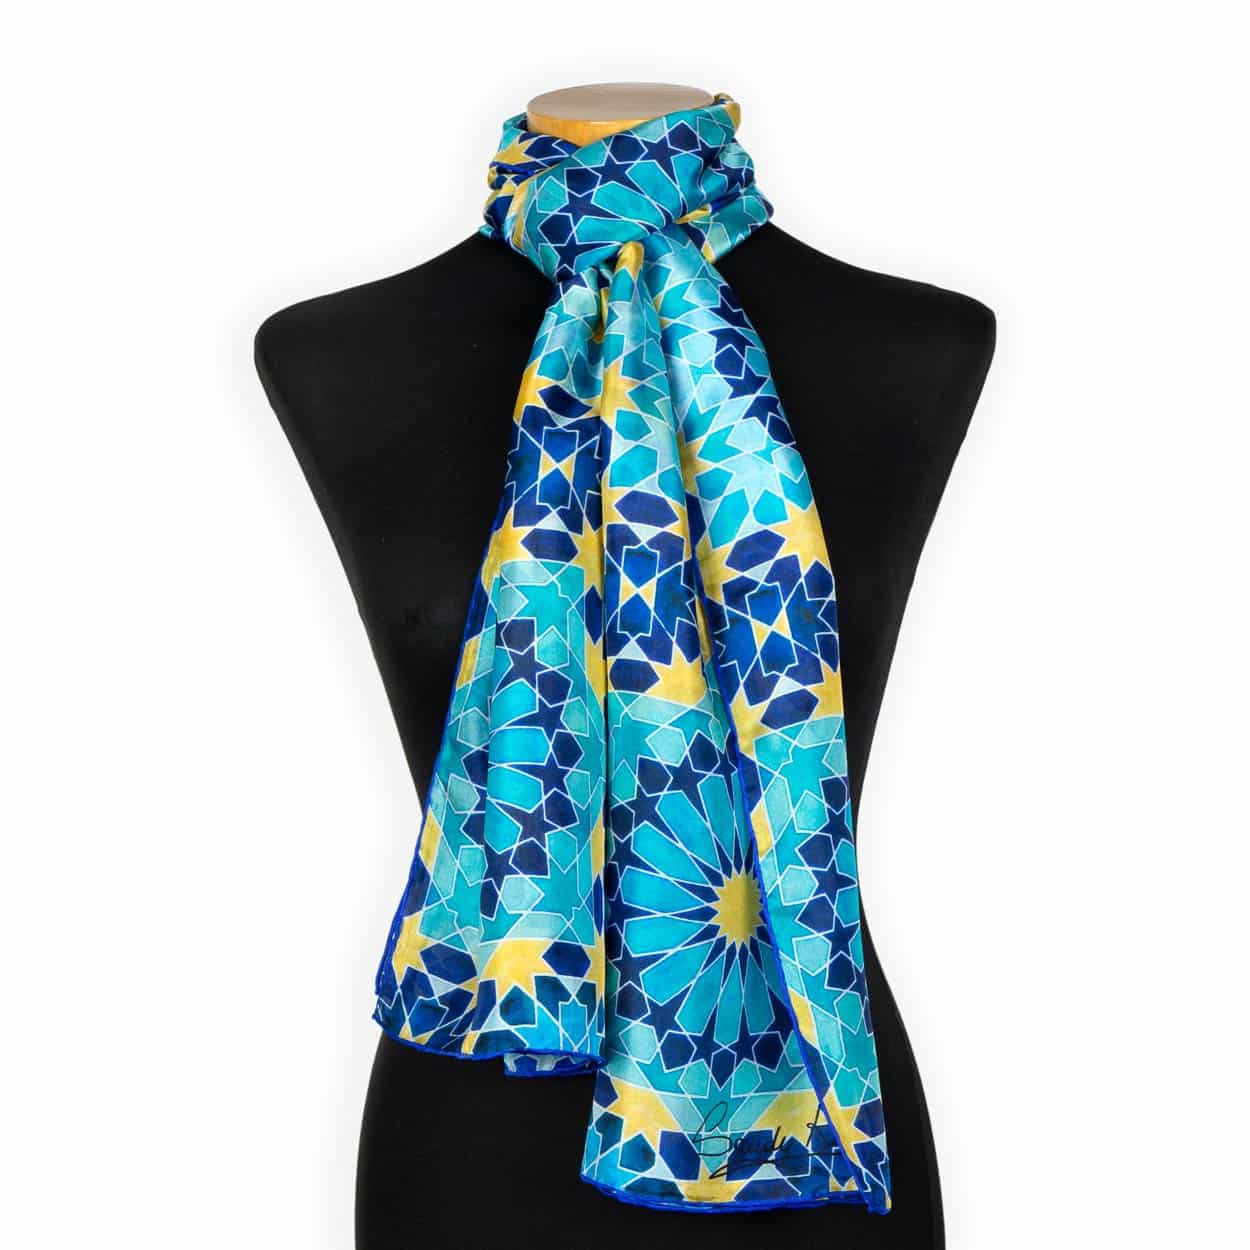 Blue silk scarf with Islamic Art Print designed by Sandy Kurt